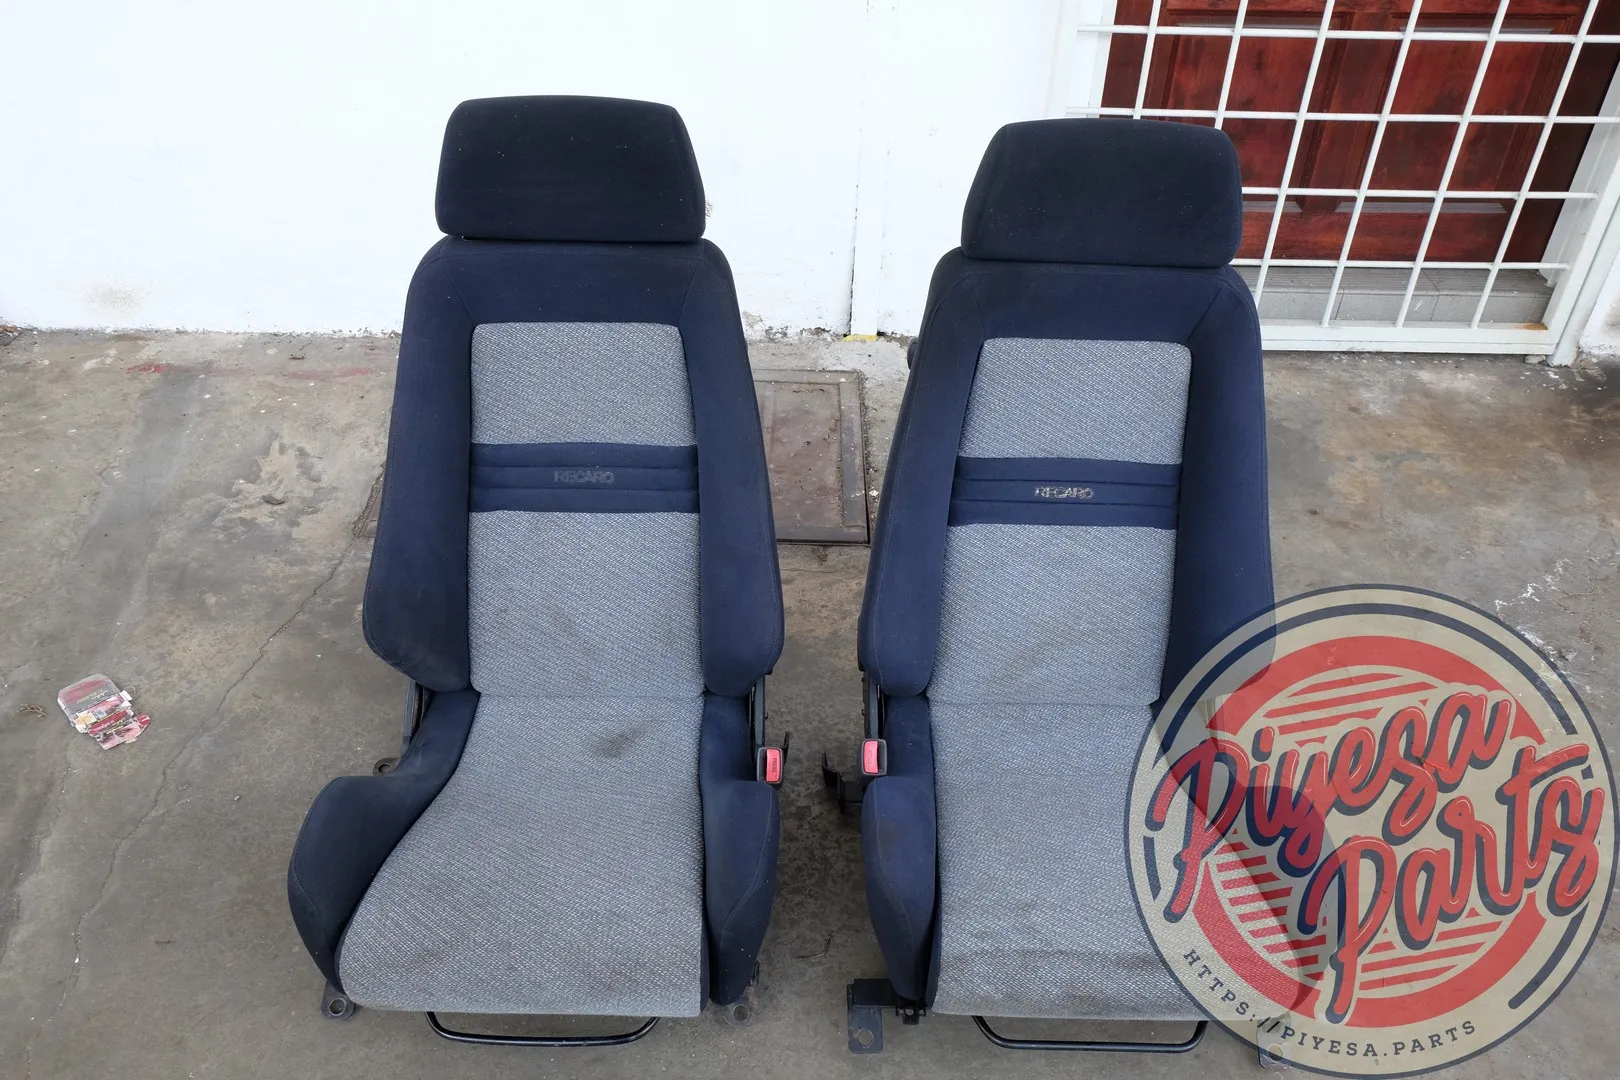 Recaro Njoy AE111 Seat Railings